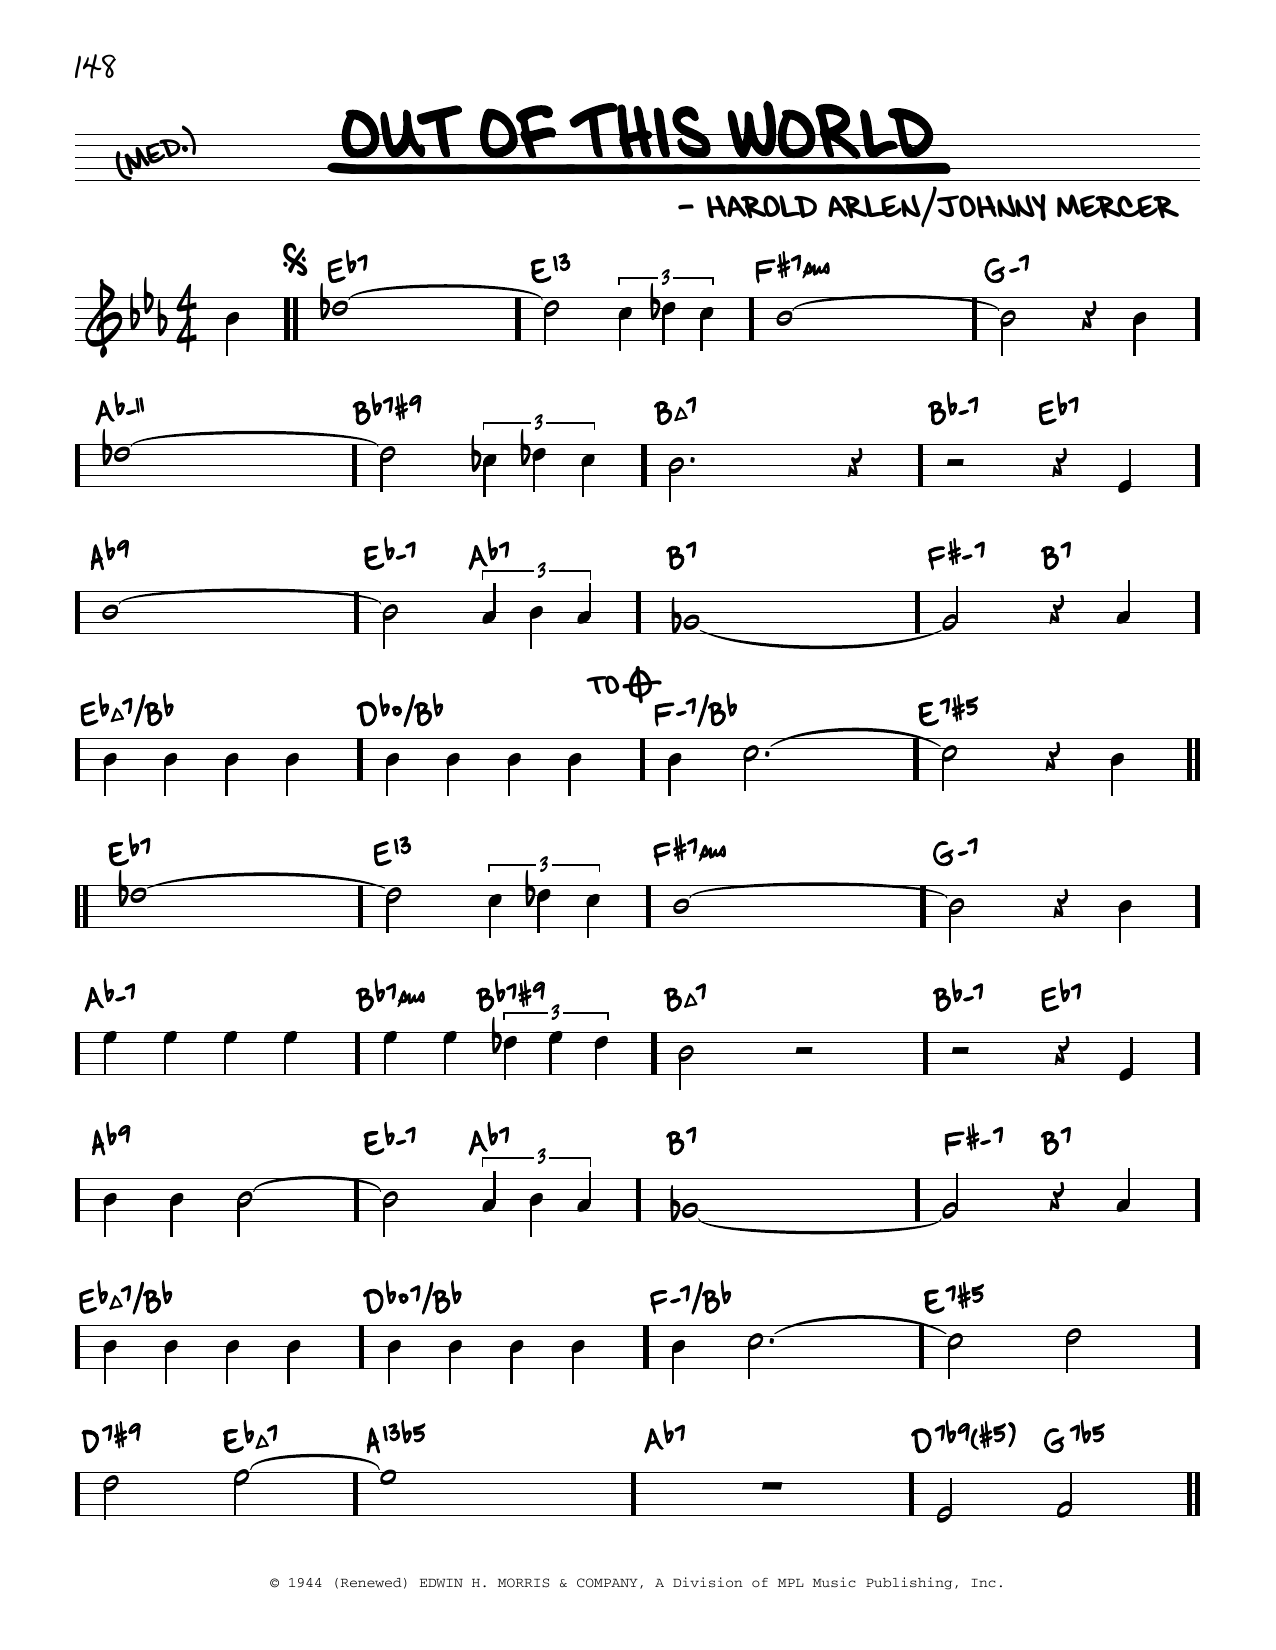 Harold Arlen Out Of This World (arr. David Hazeltine) Sheet Music Notes & Chords for Real Book – Enhanced Chords - Download or Print PDF